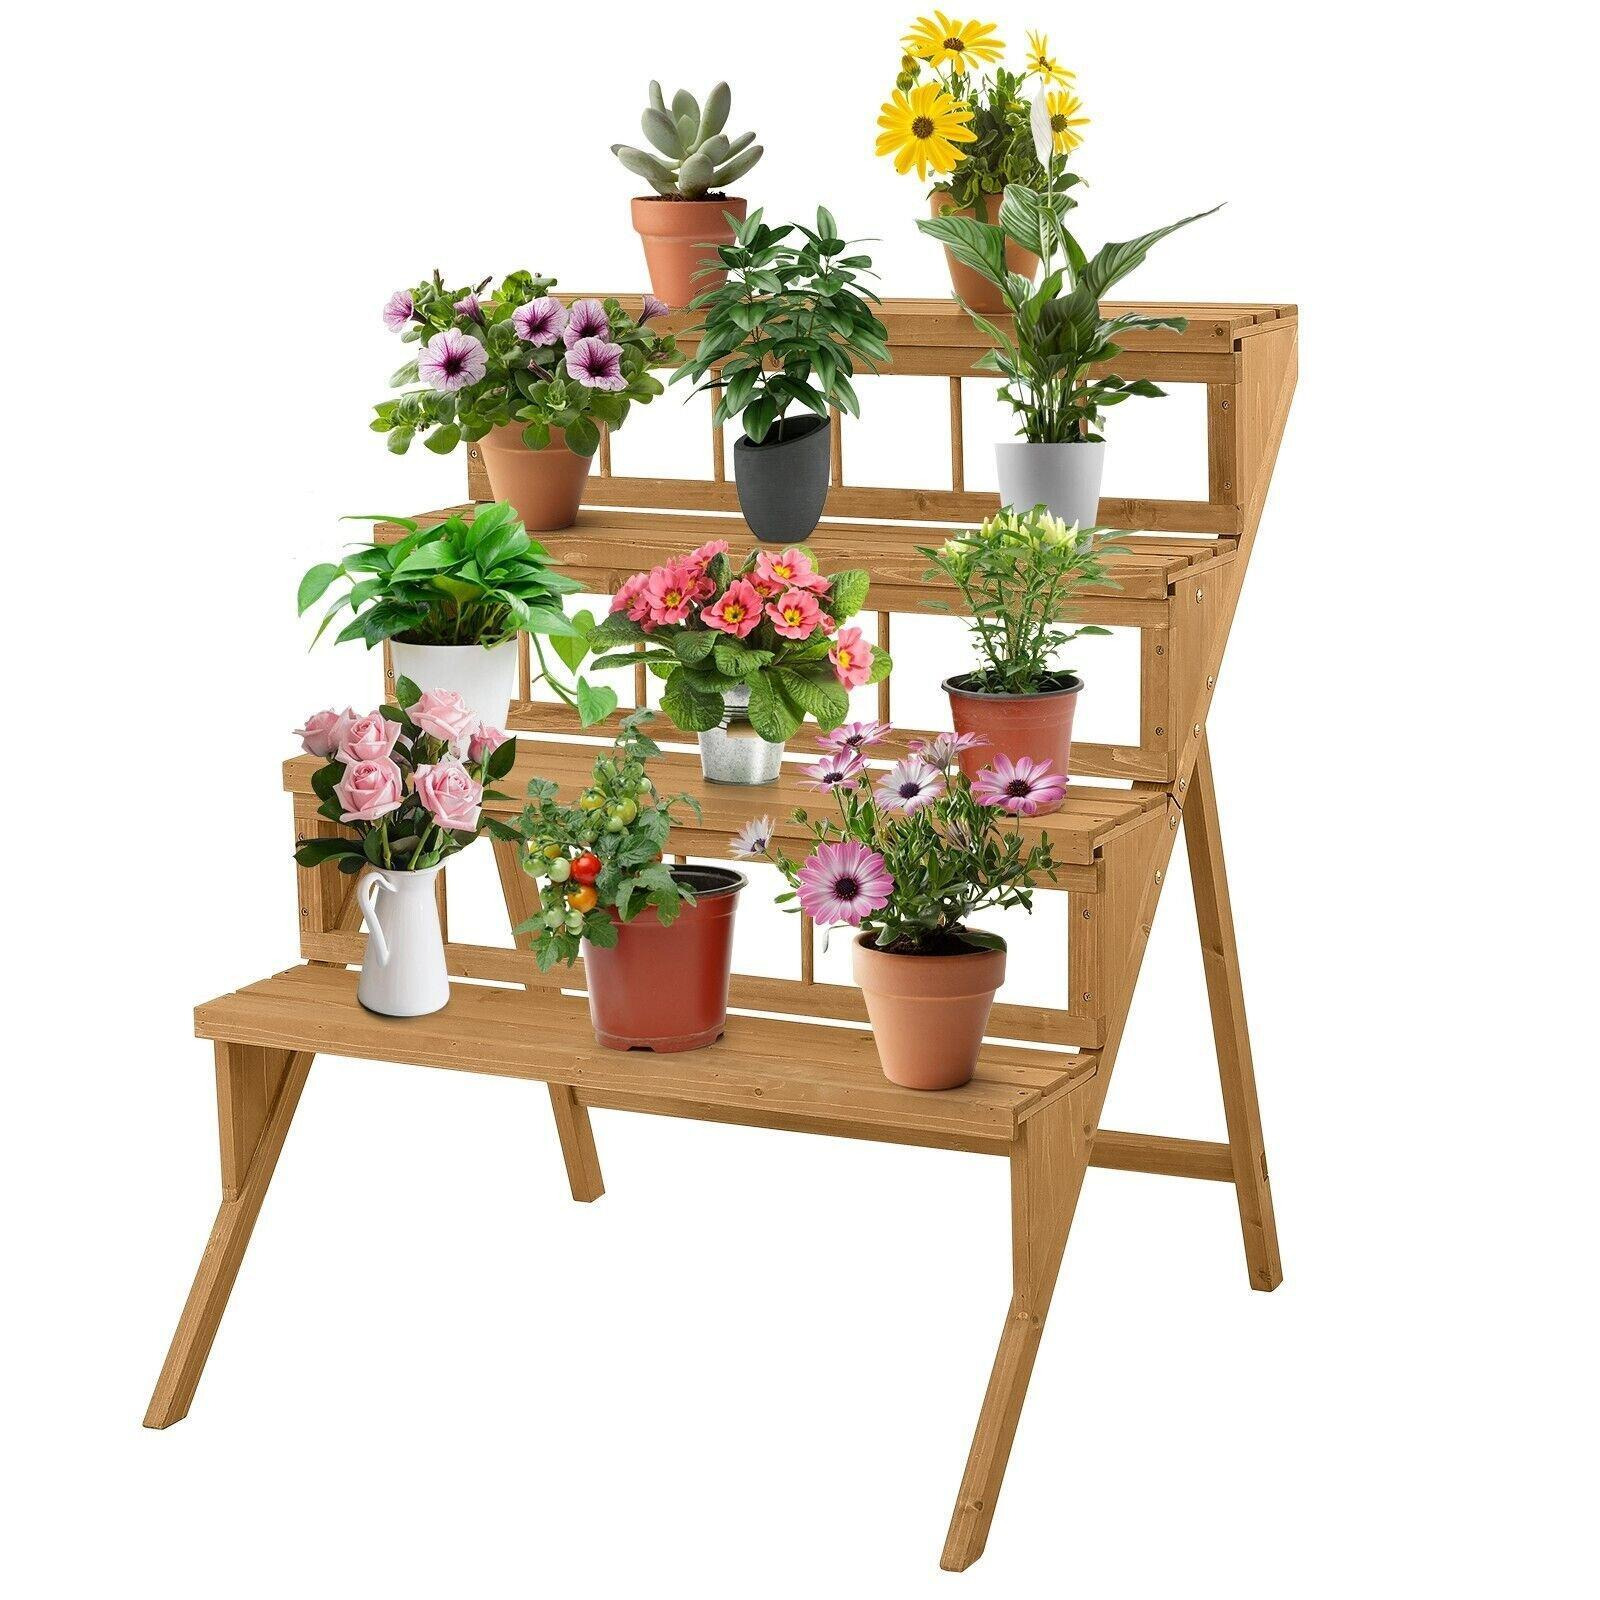 4-Tier Wooden Plant Stand Ladder Flower Pot Display Shelf Rack Holder Organizer - image 1